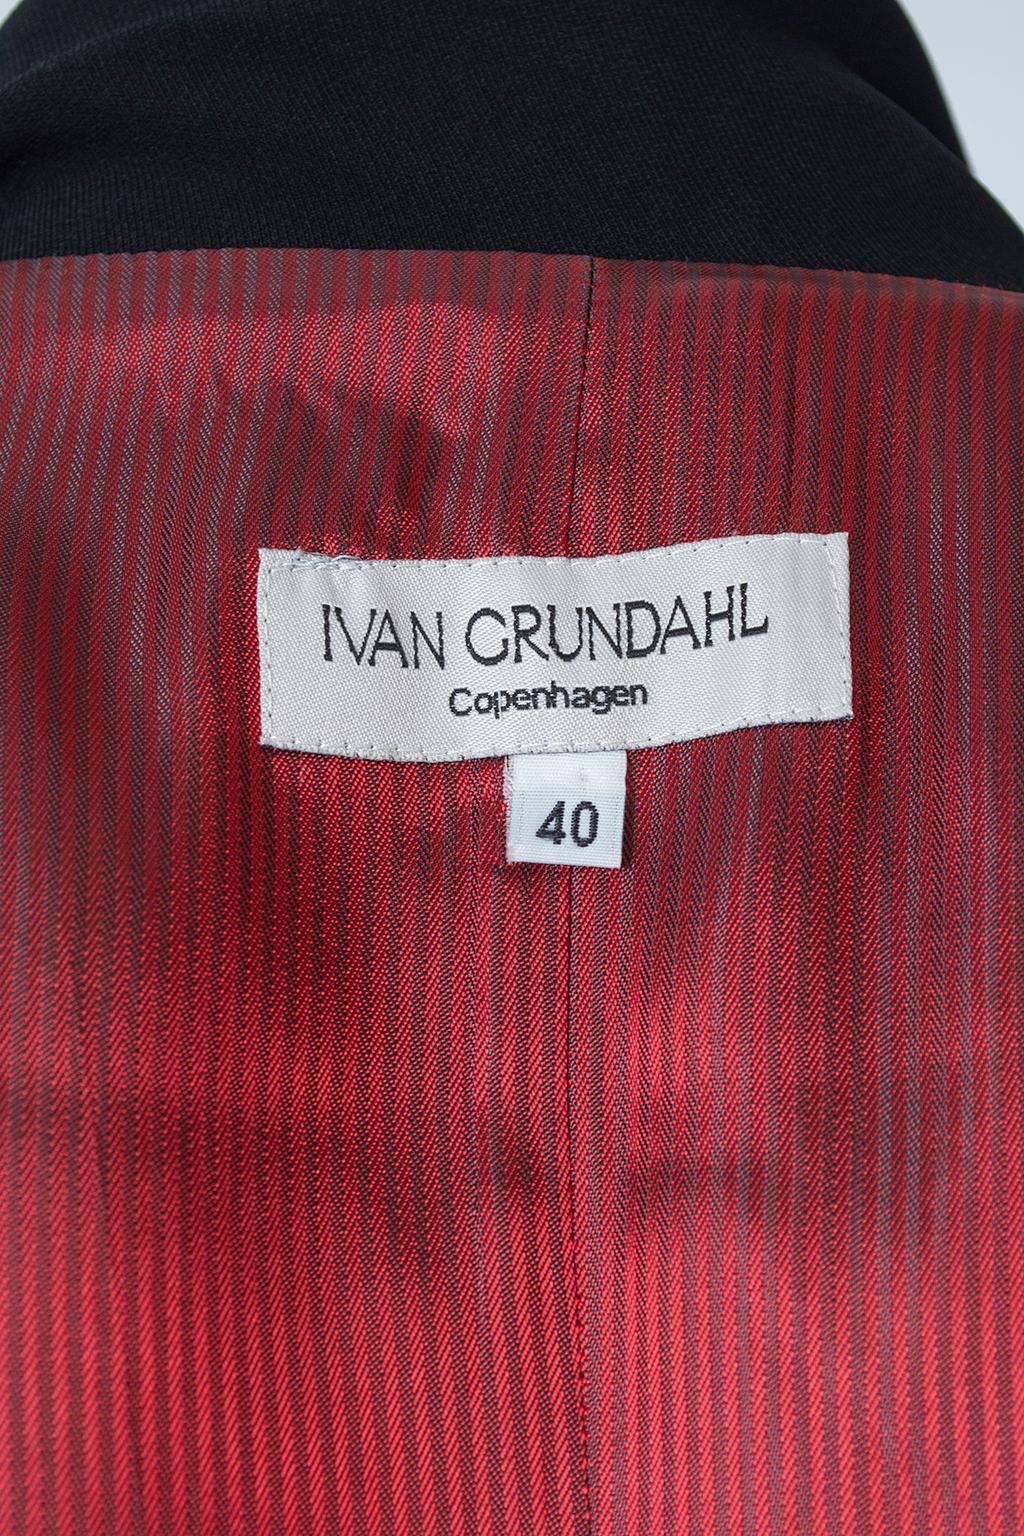 Ivan Grundahl Black Avant Garde Wrapping Draped Trench Coat – Eu 40 (Med), 1990s For Sale 10